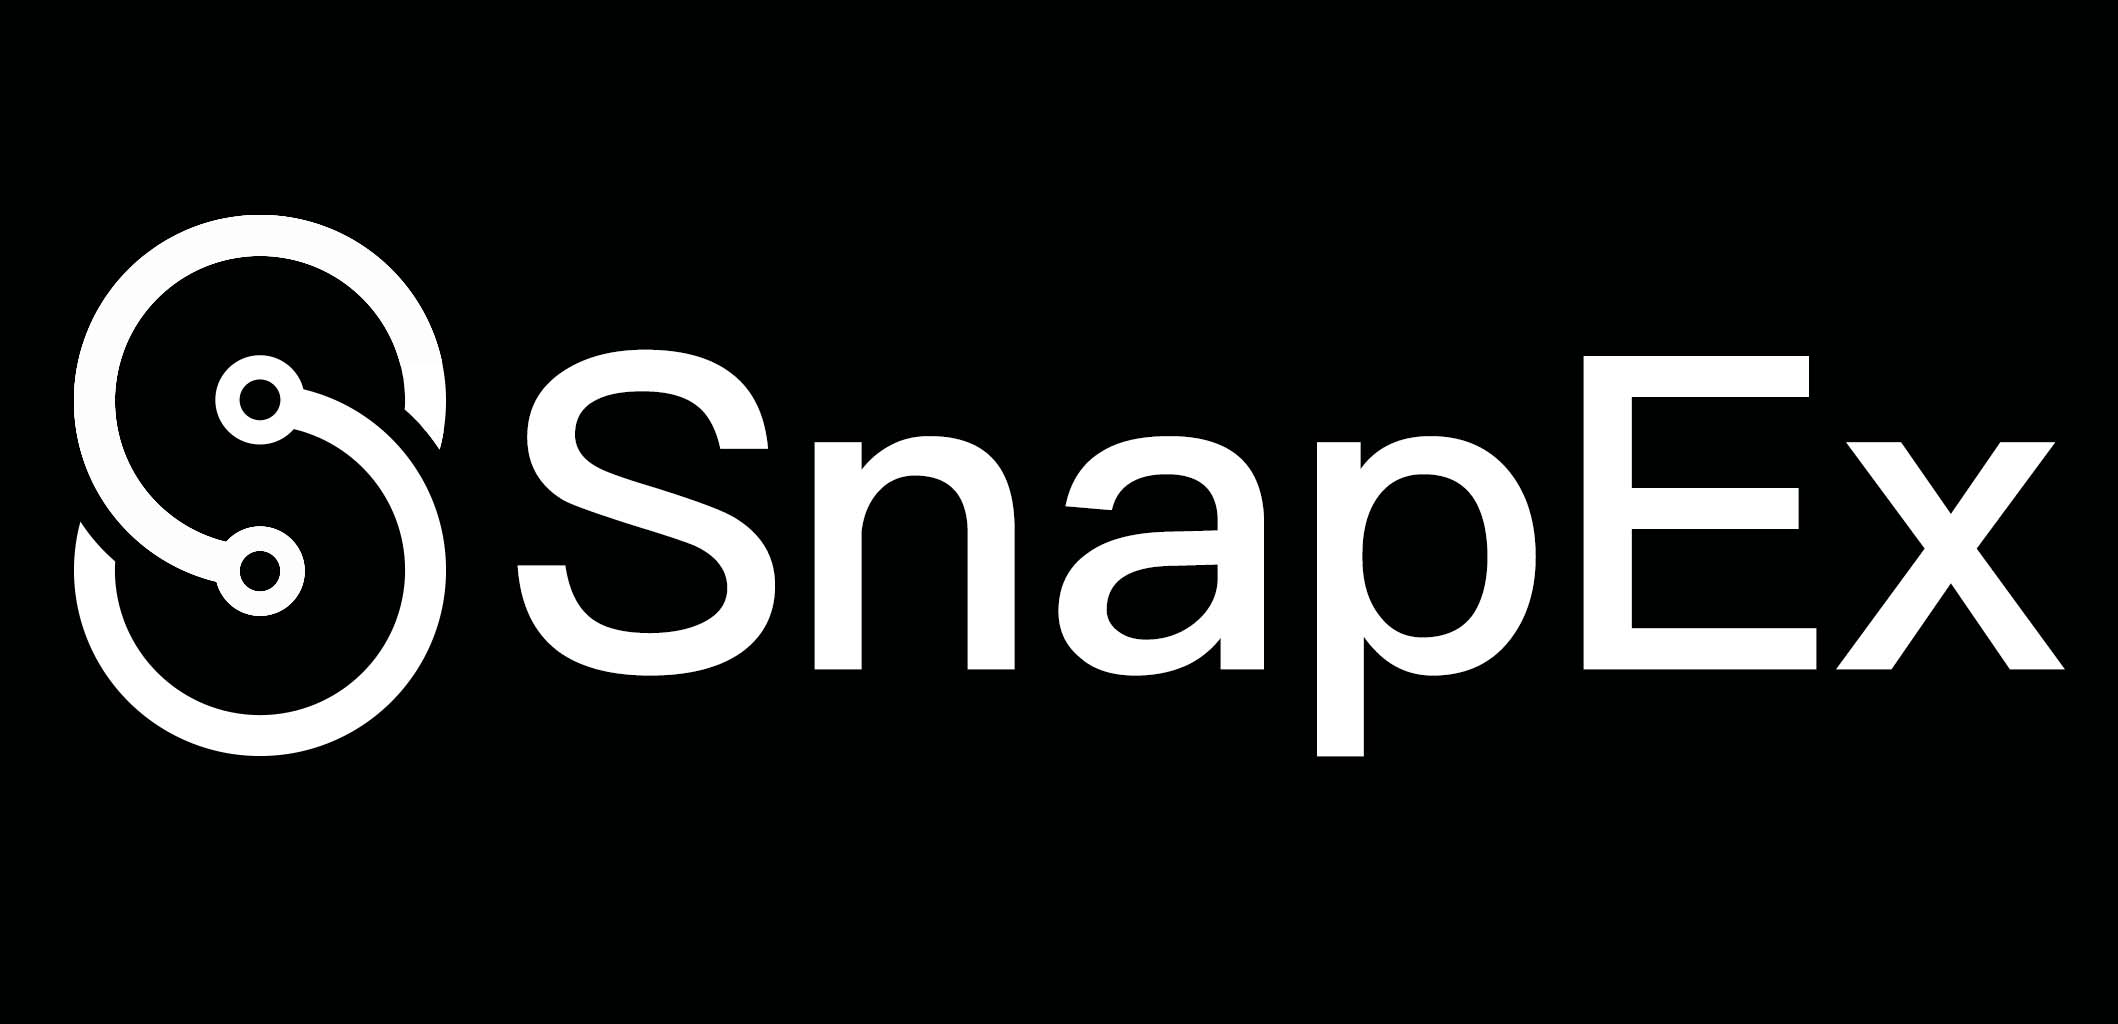 SnapEx